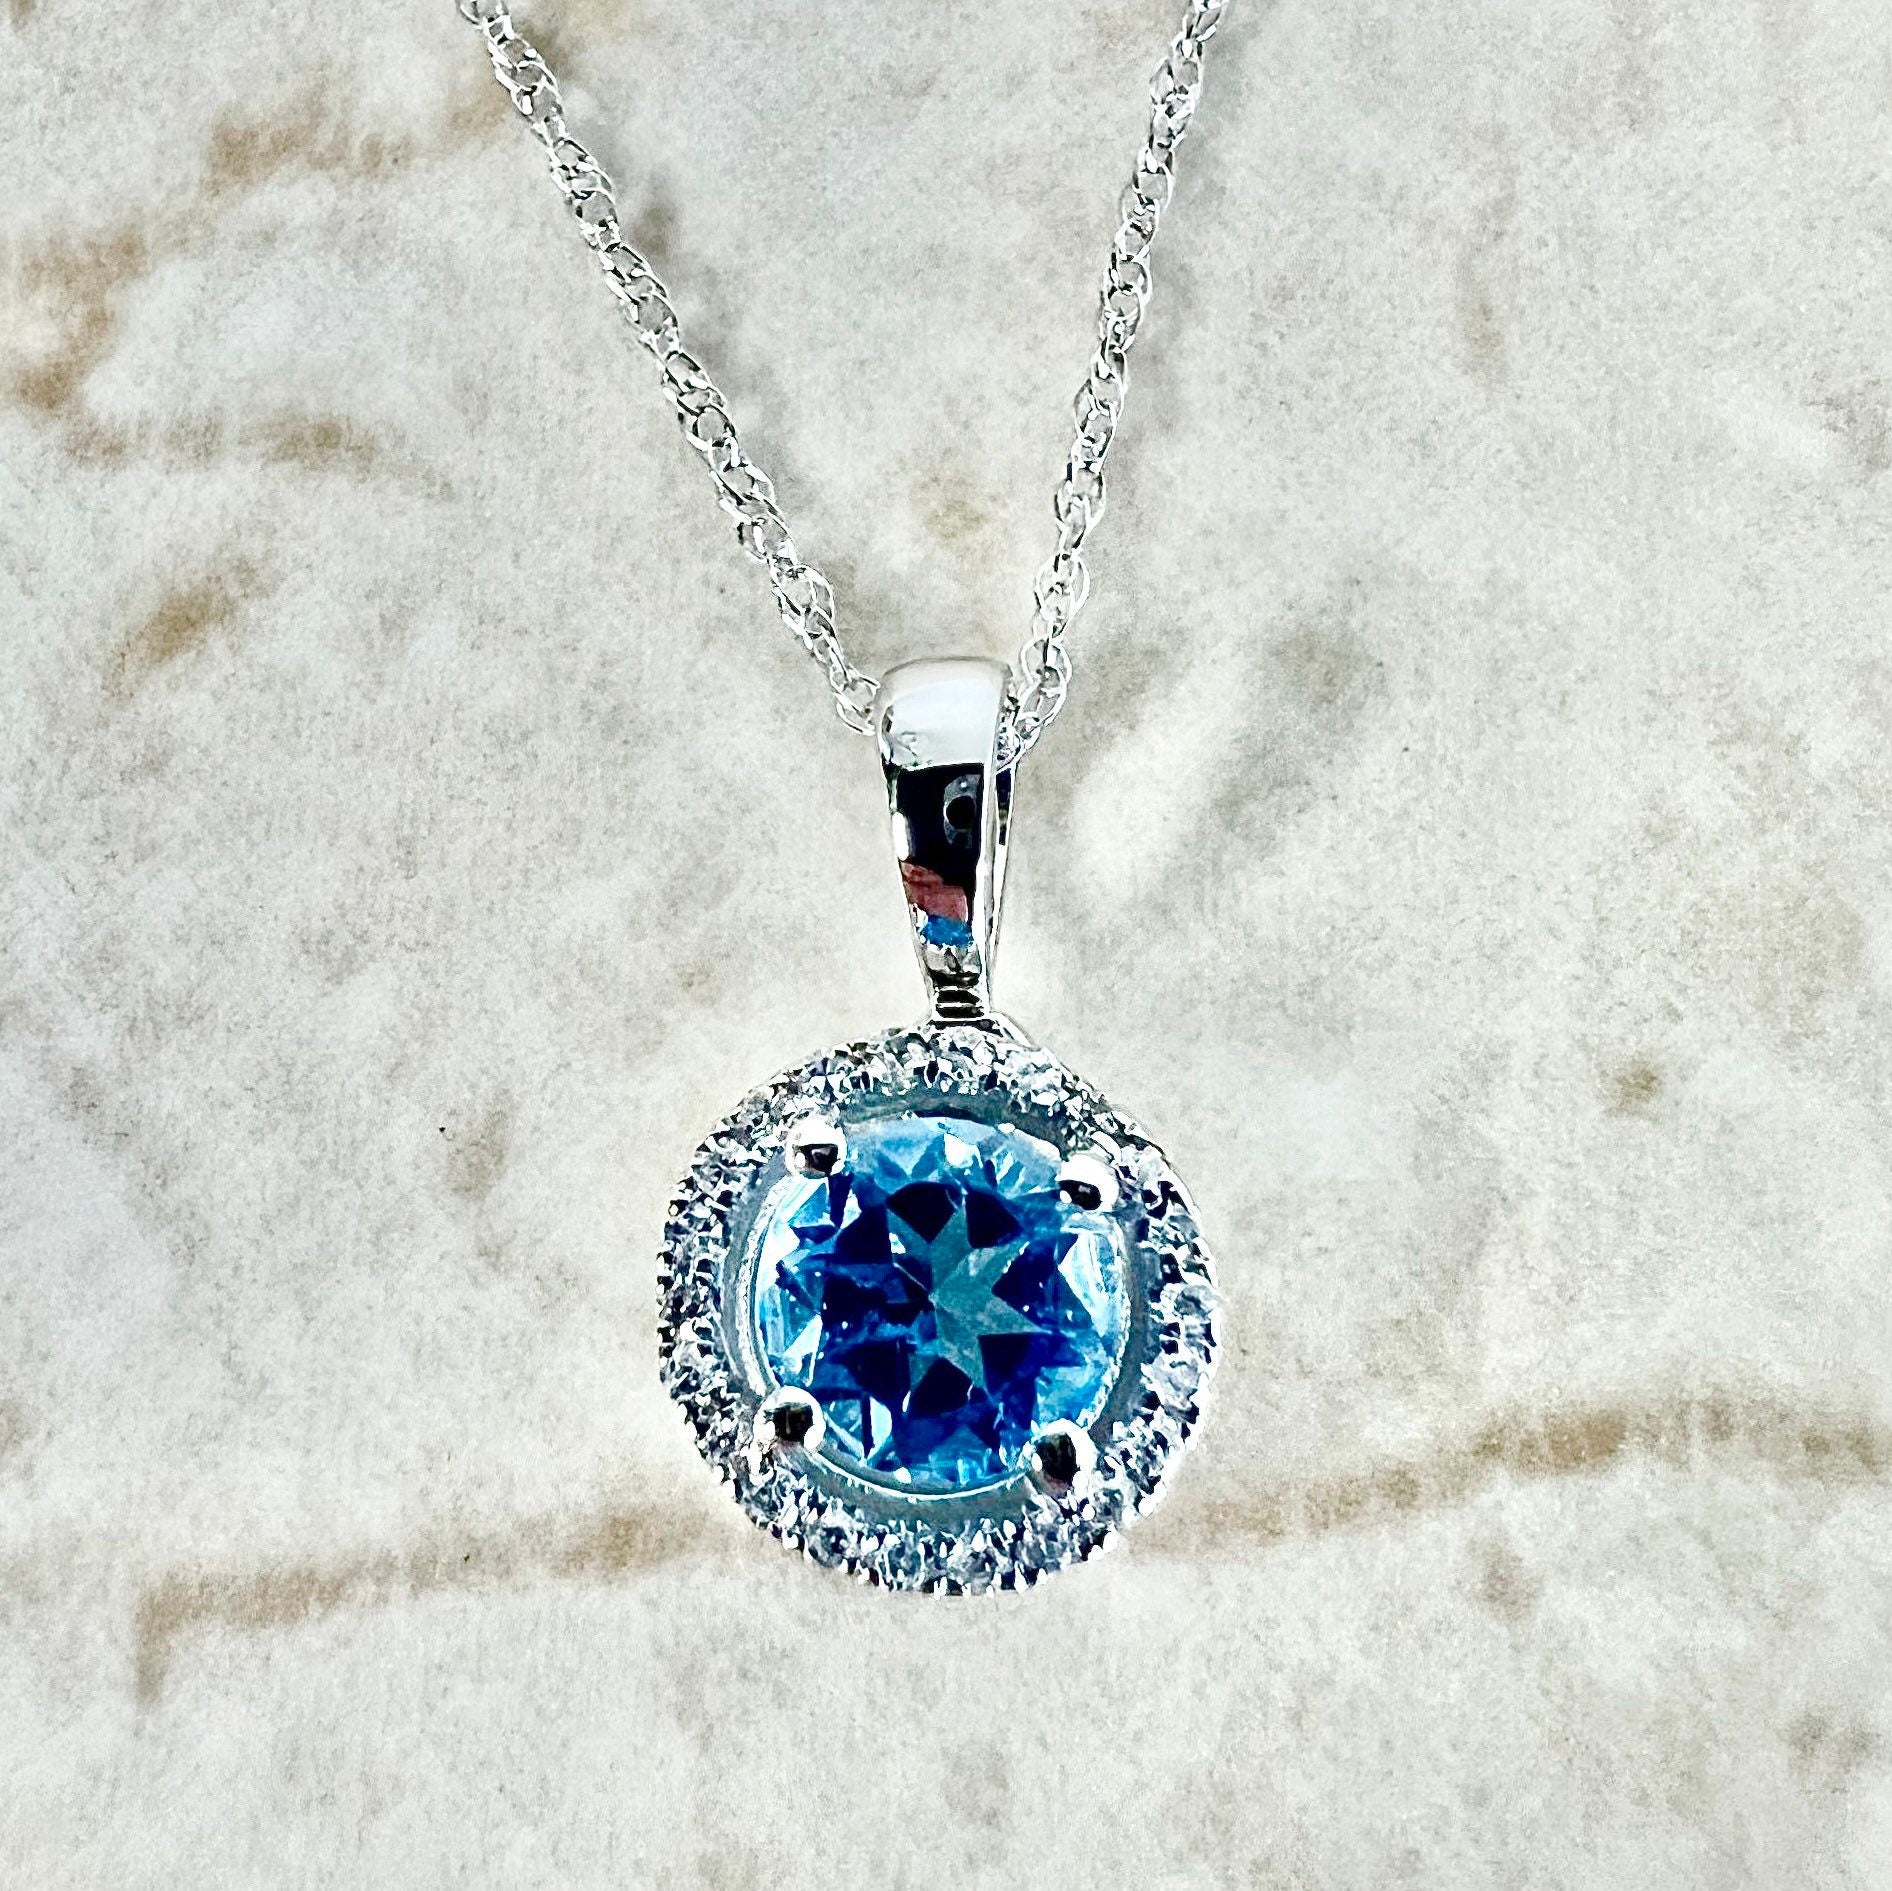 Blue Topaz Necklace Diamond Accents Sterling Silver | Kay